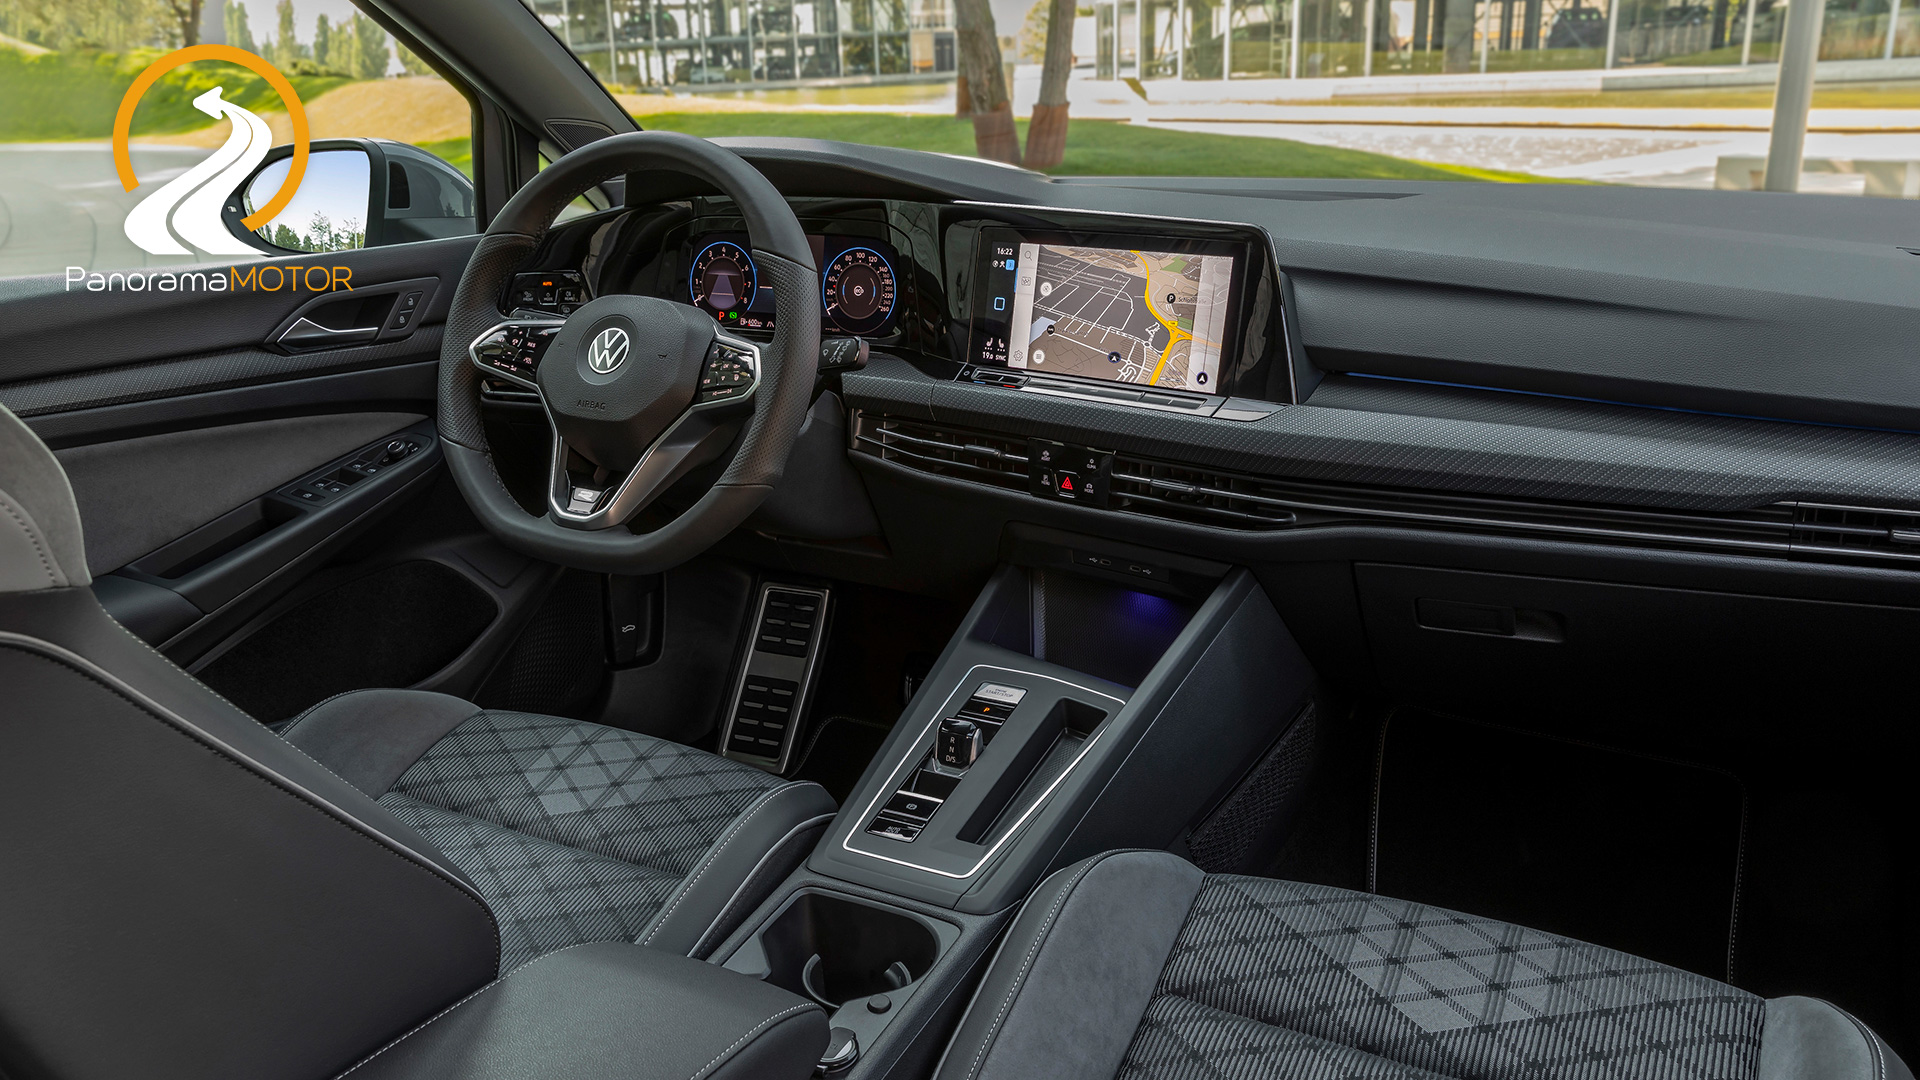 Volkswagen Golf RLine eTSi 2020 Panorama Motor